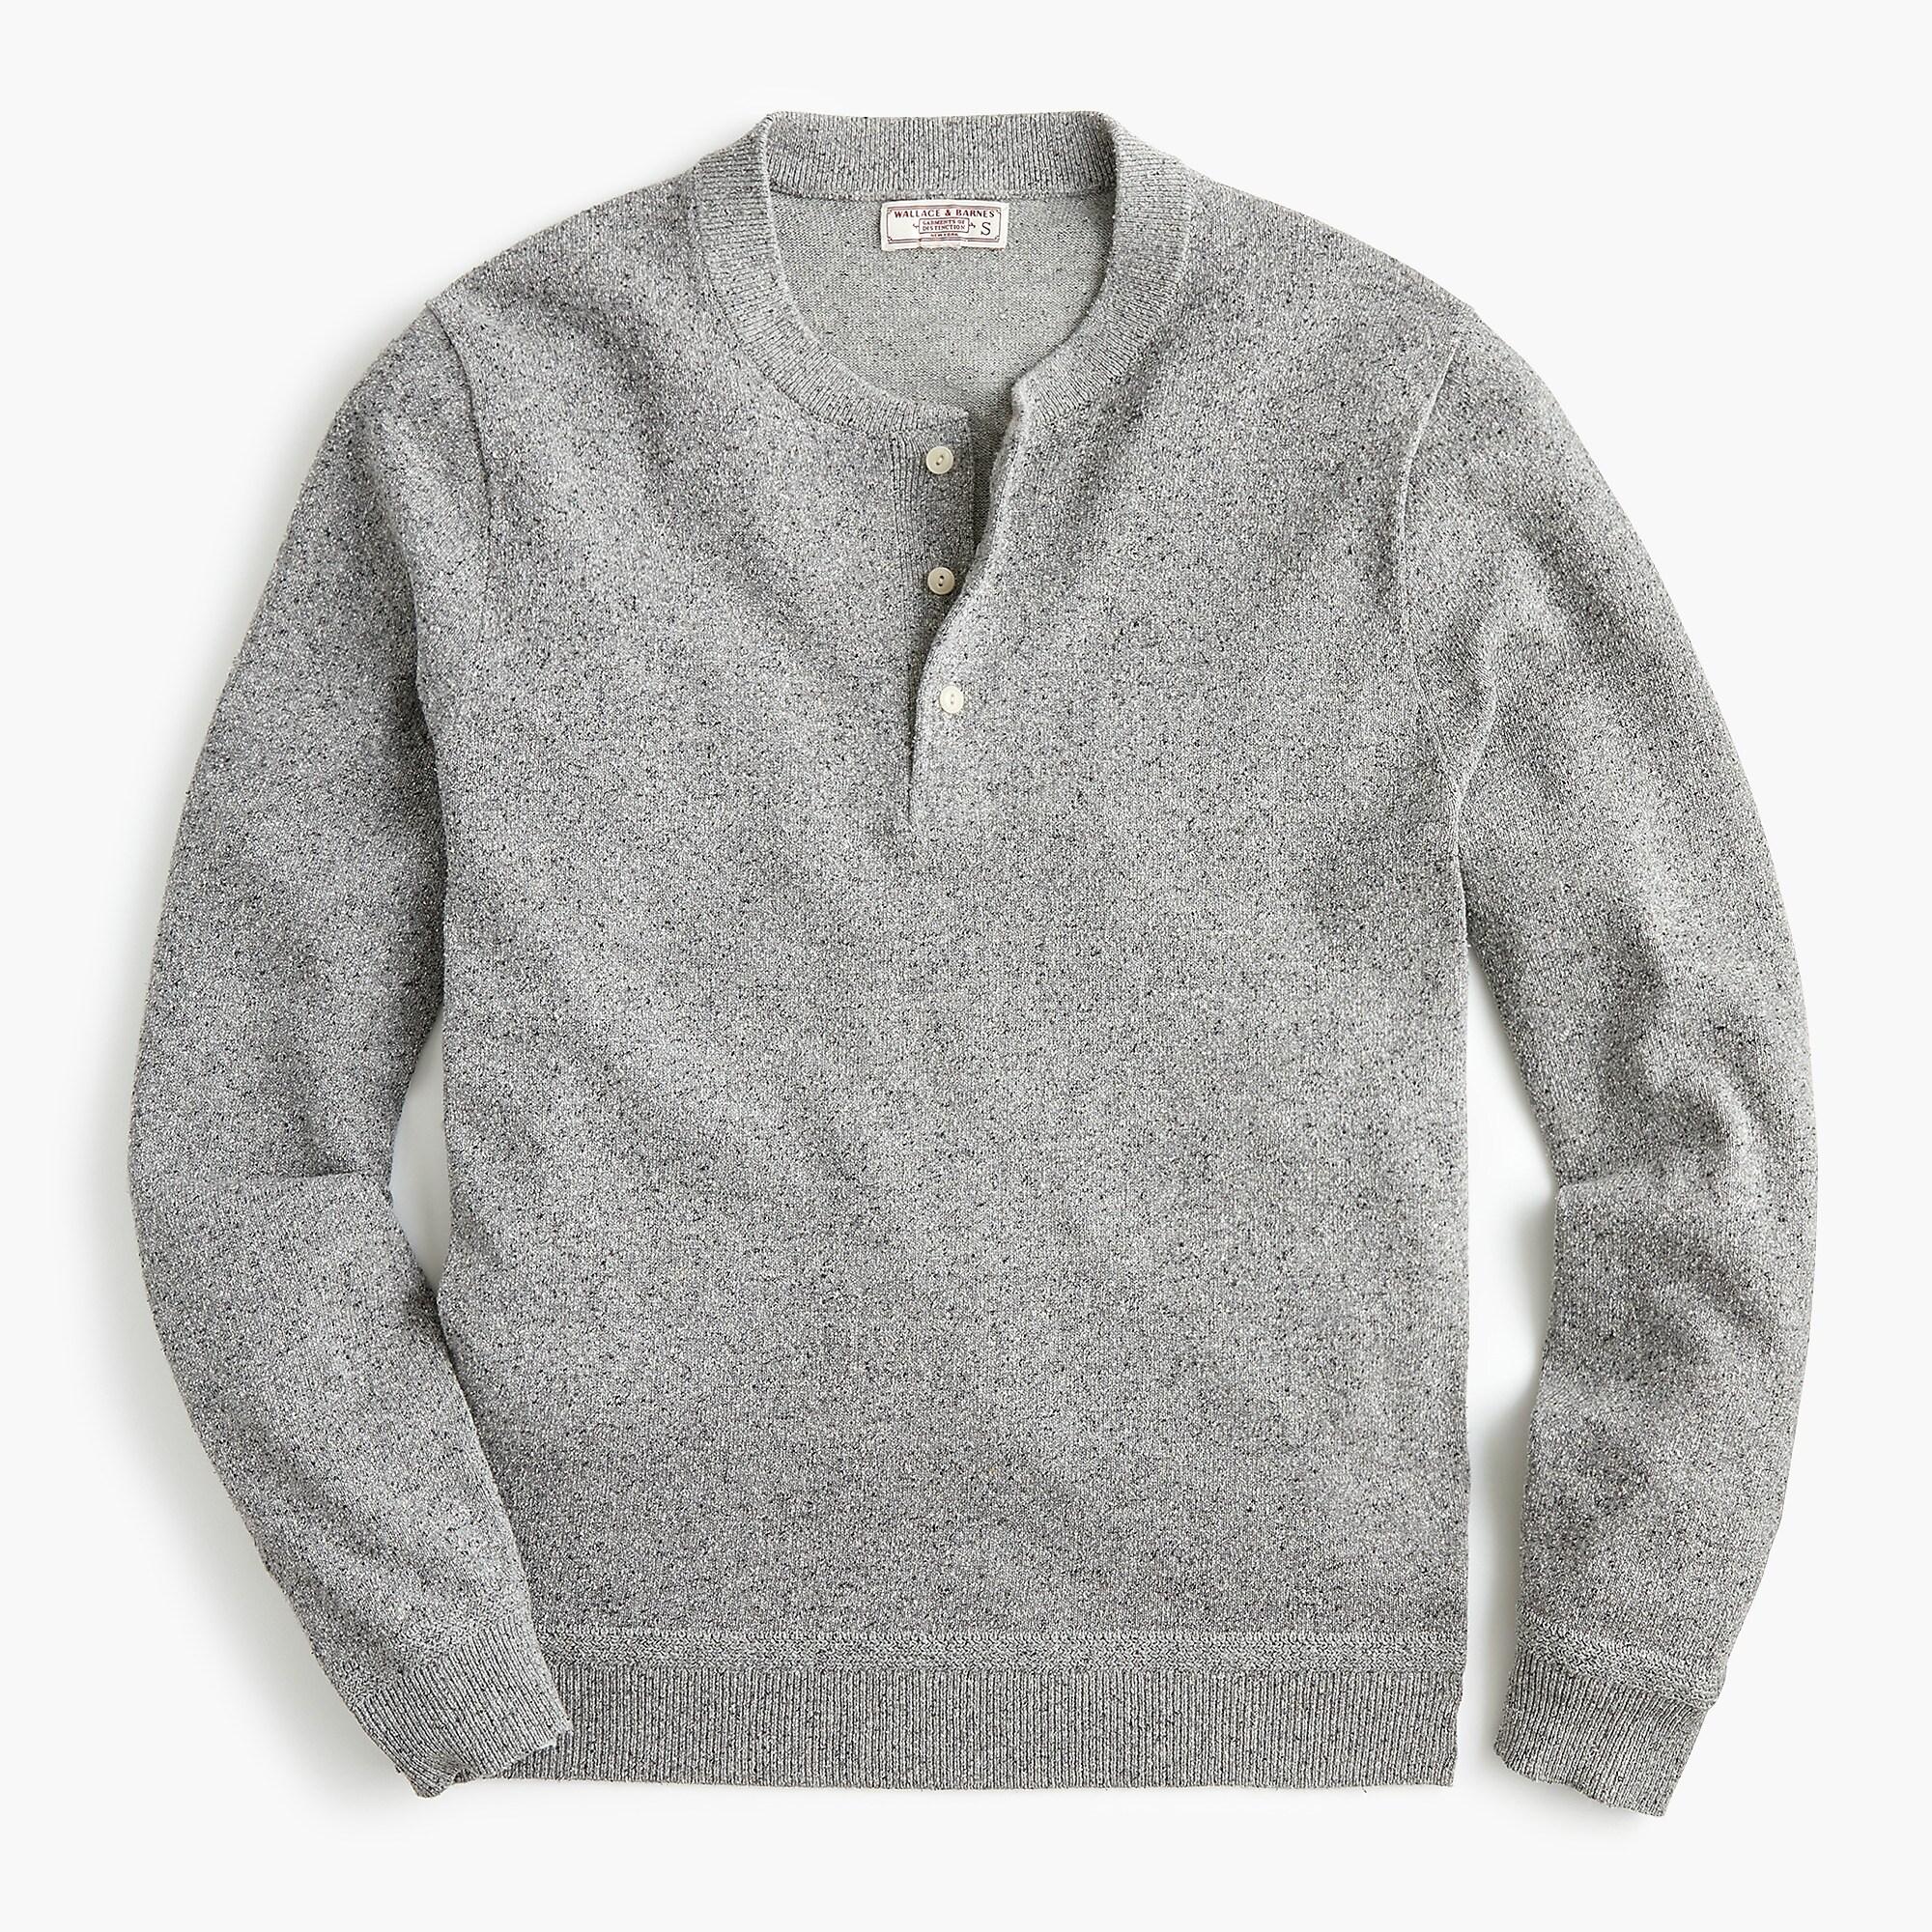 J.Crew Wallace & Barnes Silk-cotton Henley Sweater in Gray for Men - Lyst